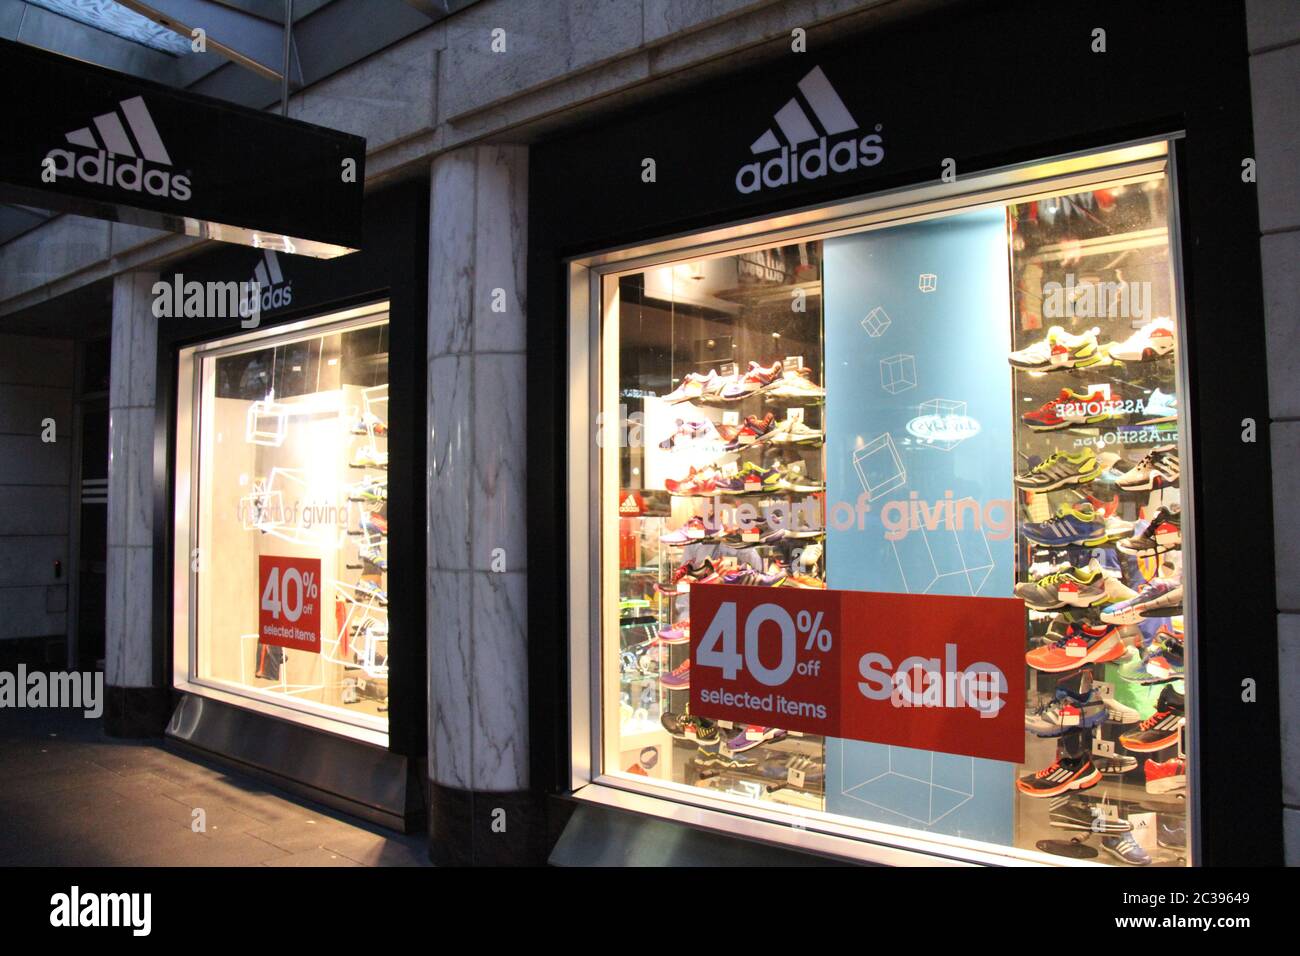 Sale at Adidas, Pitt Street Mall in 